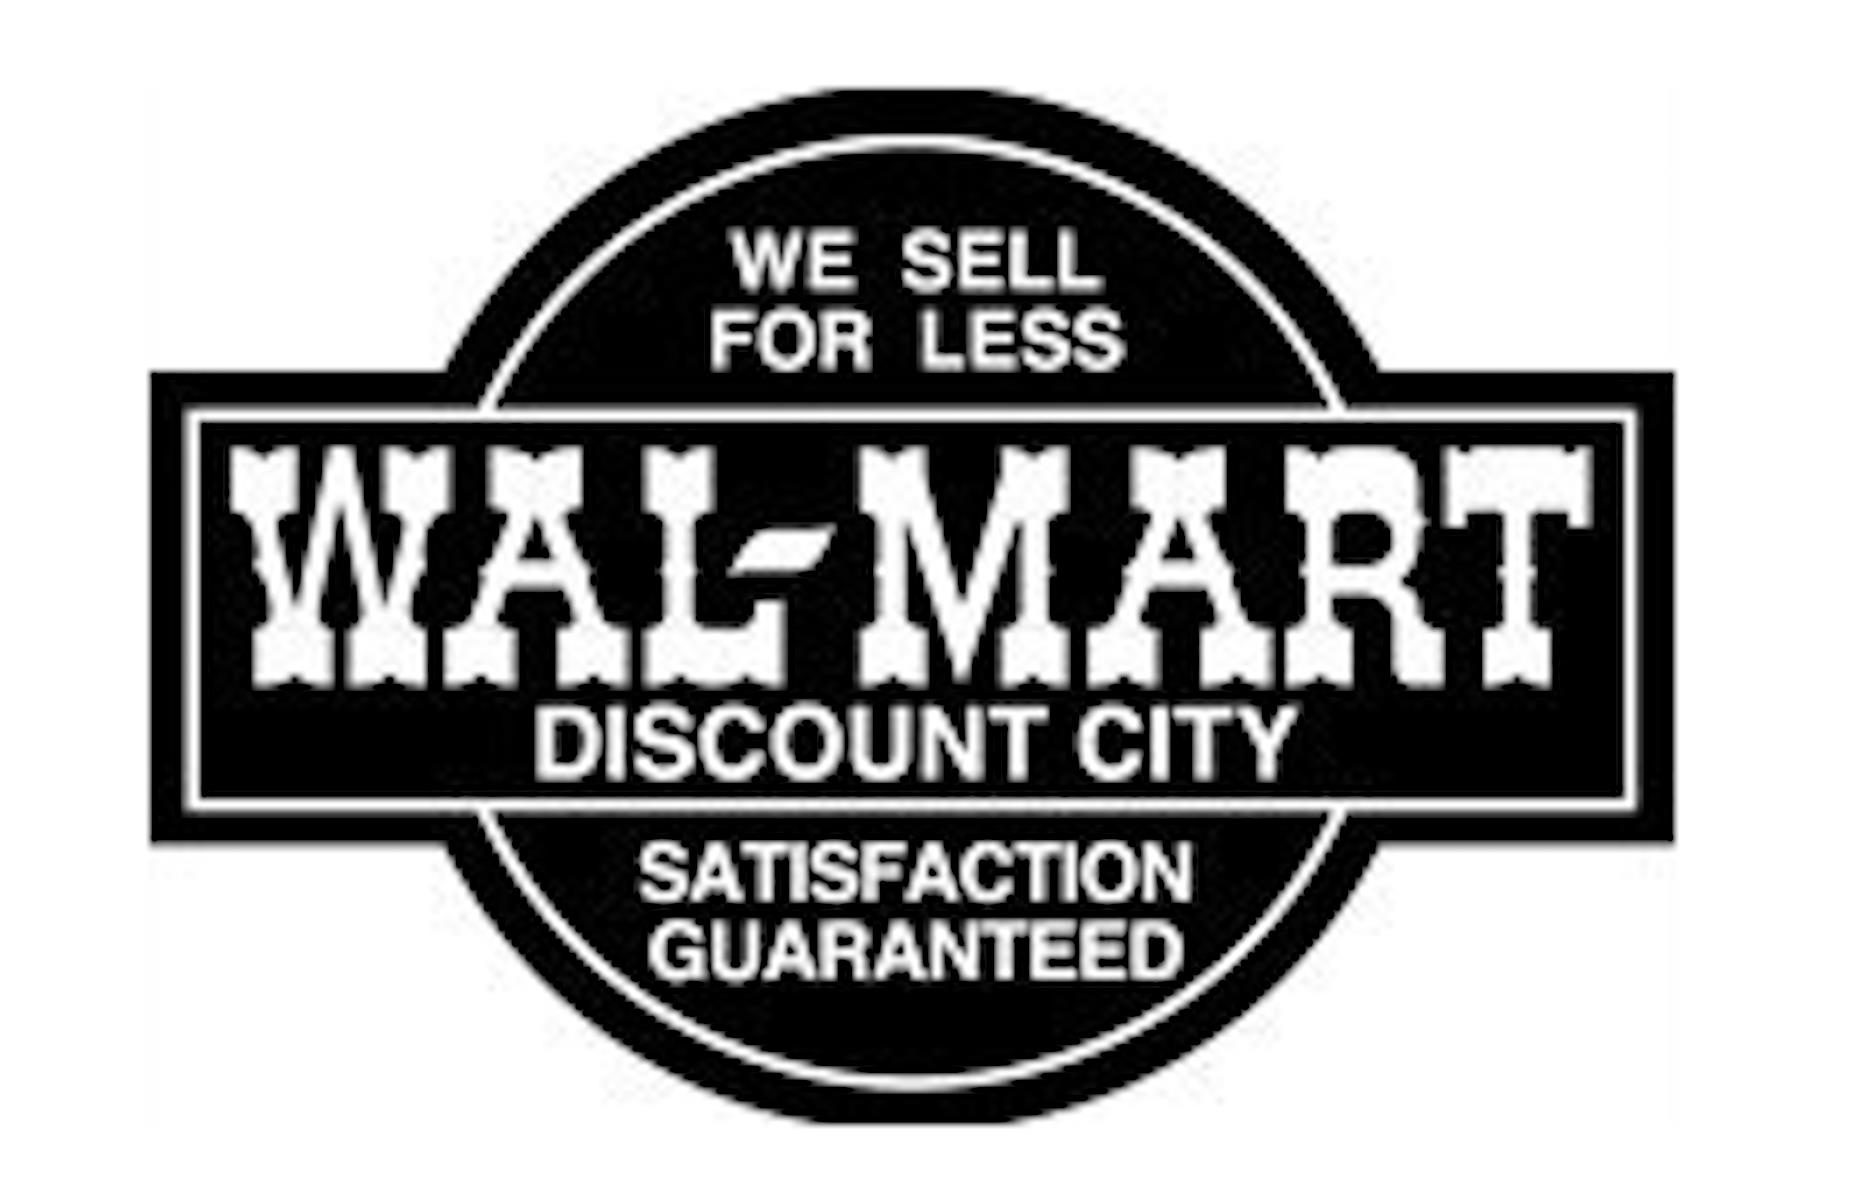 Wal-Mart incorporates